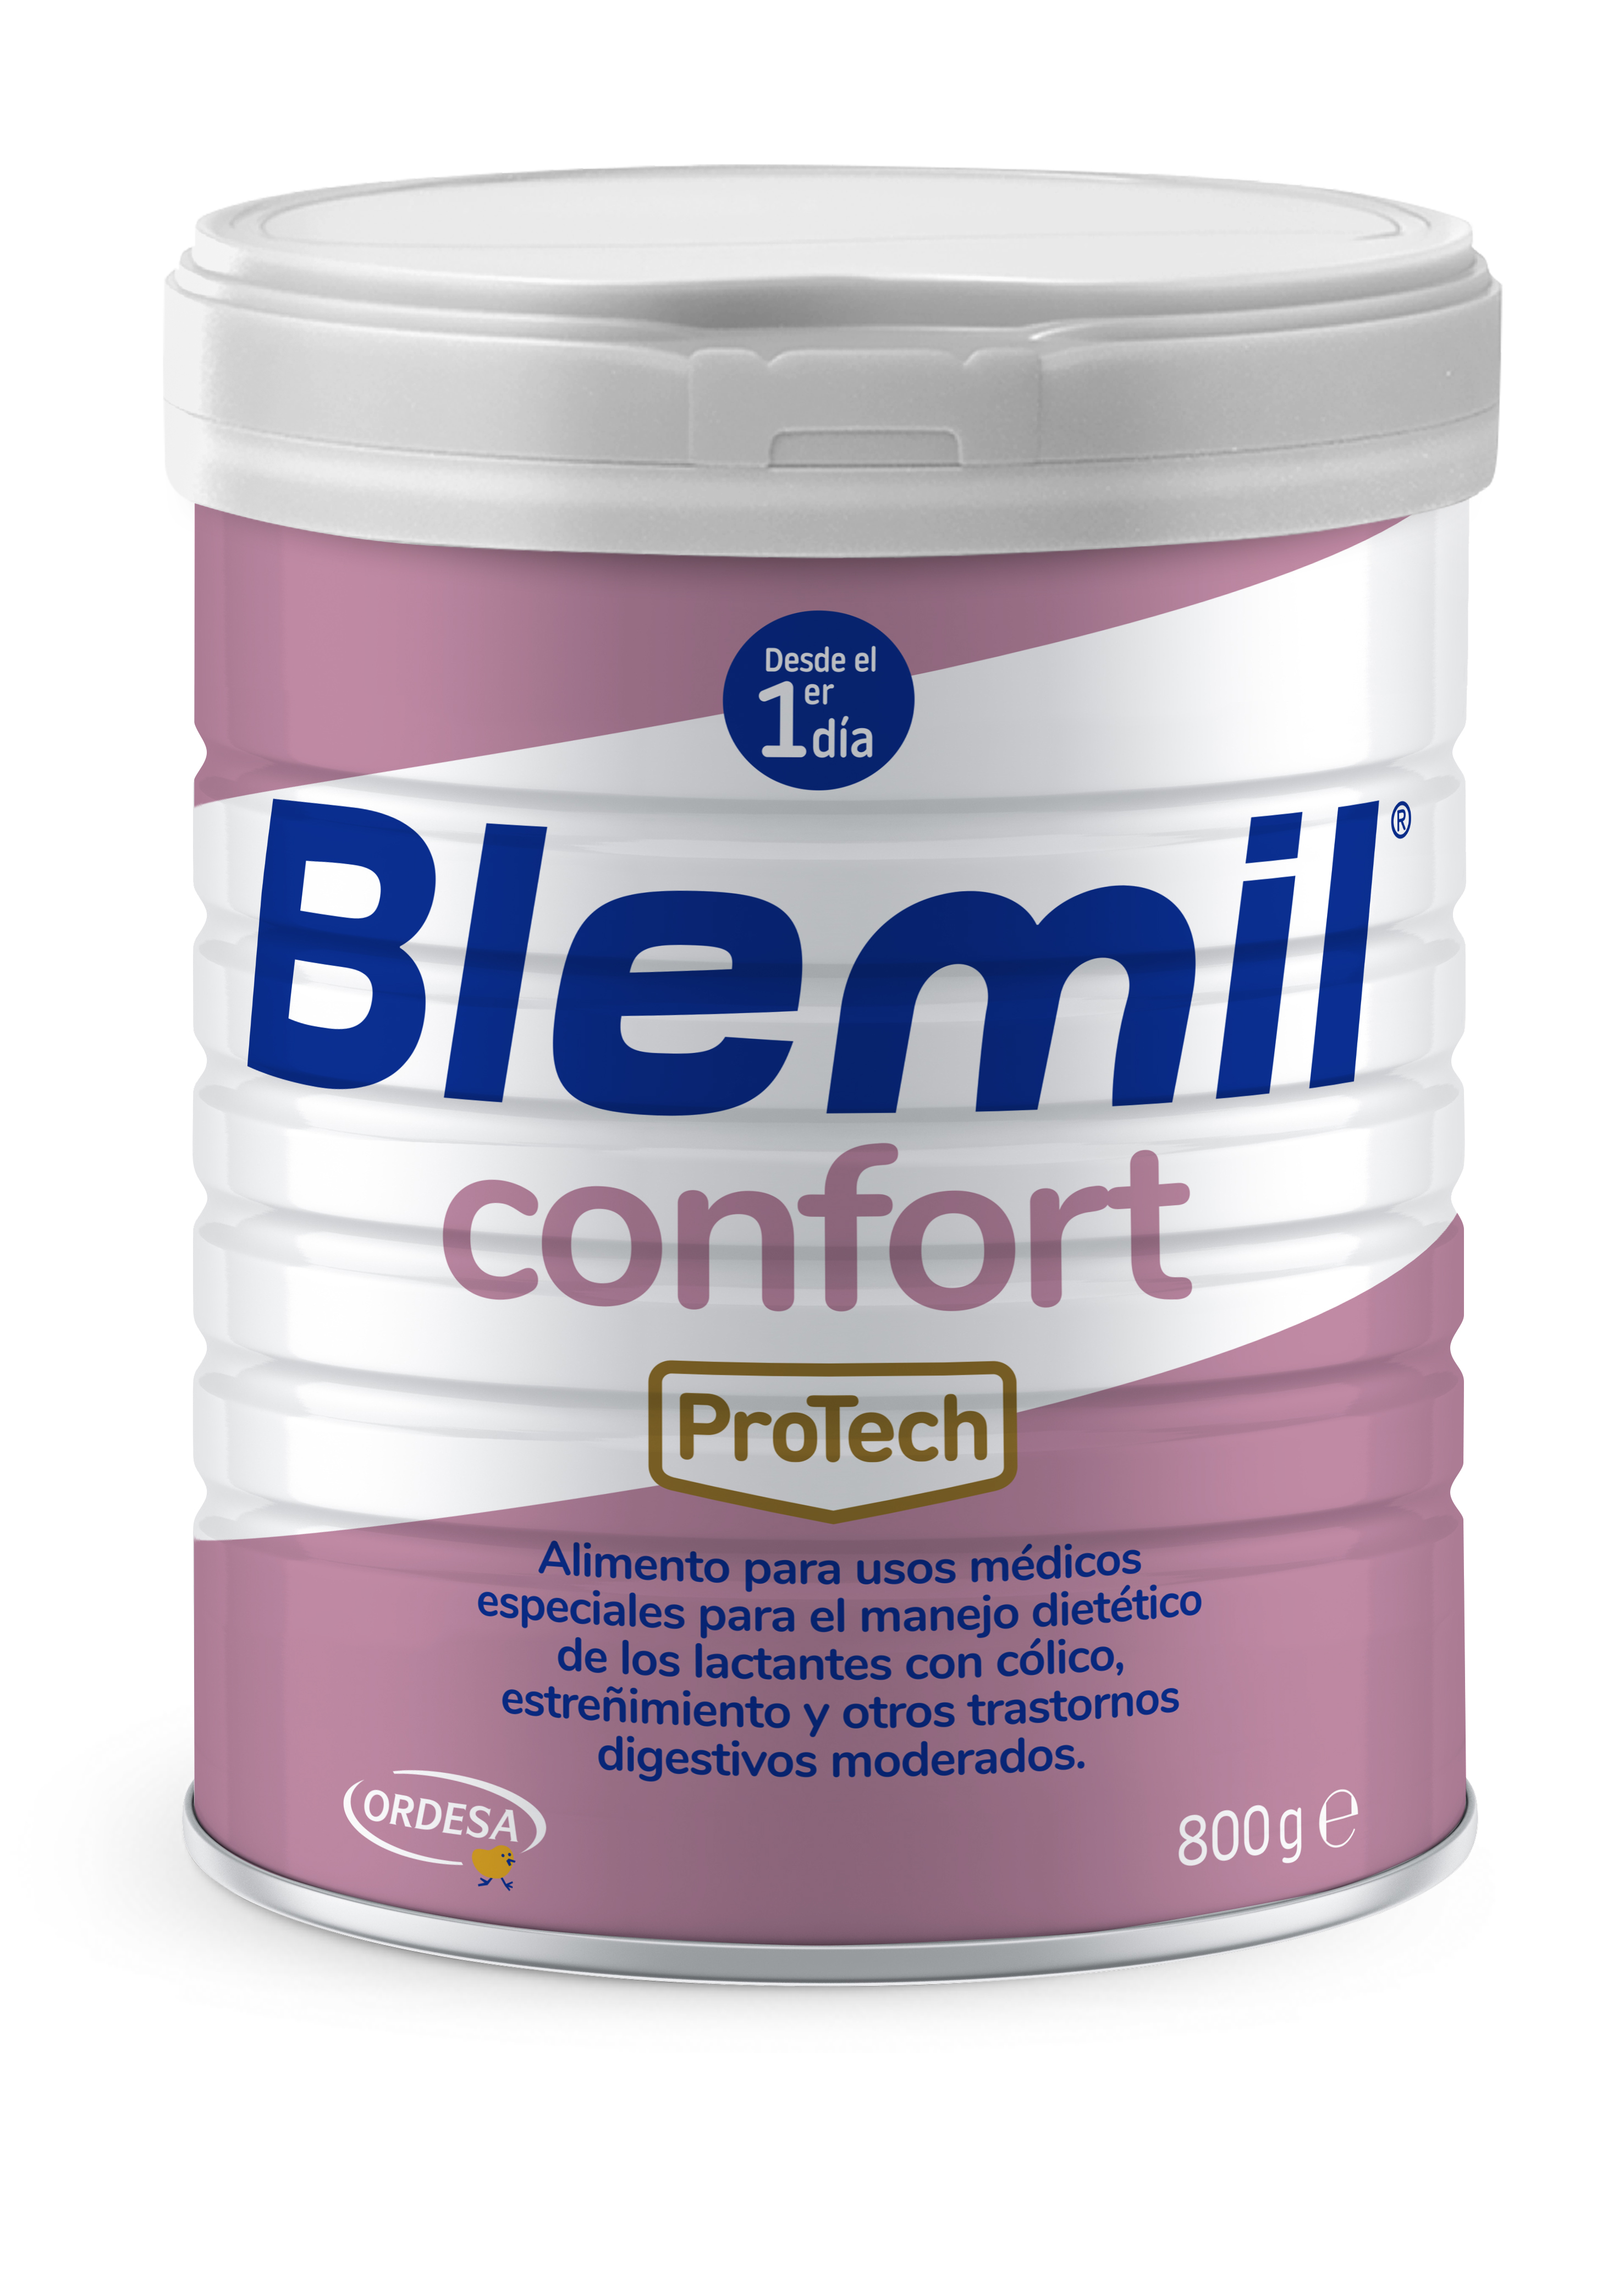 Buy Blemil Plus 3 Optimum ProTech Most Advanced tional Formula for